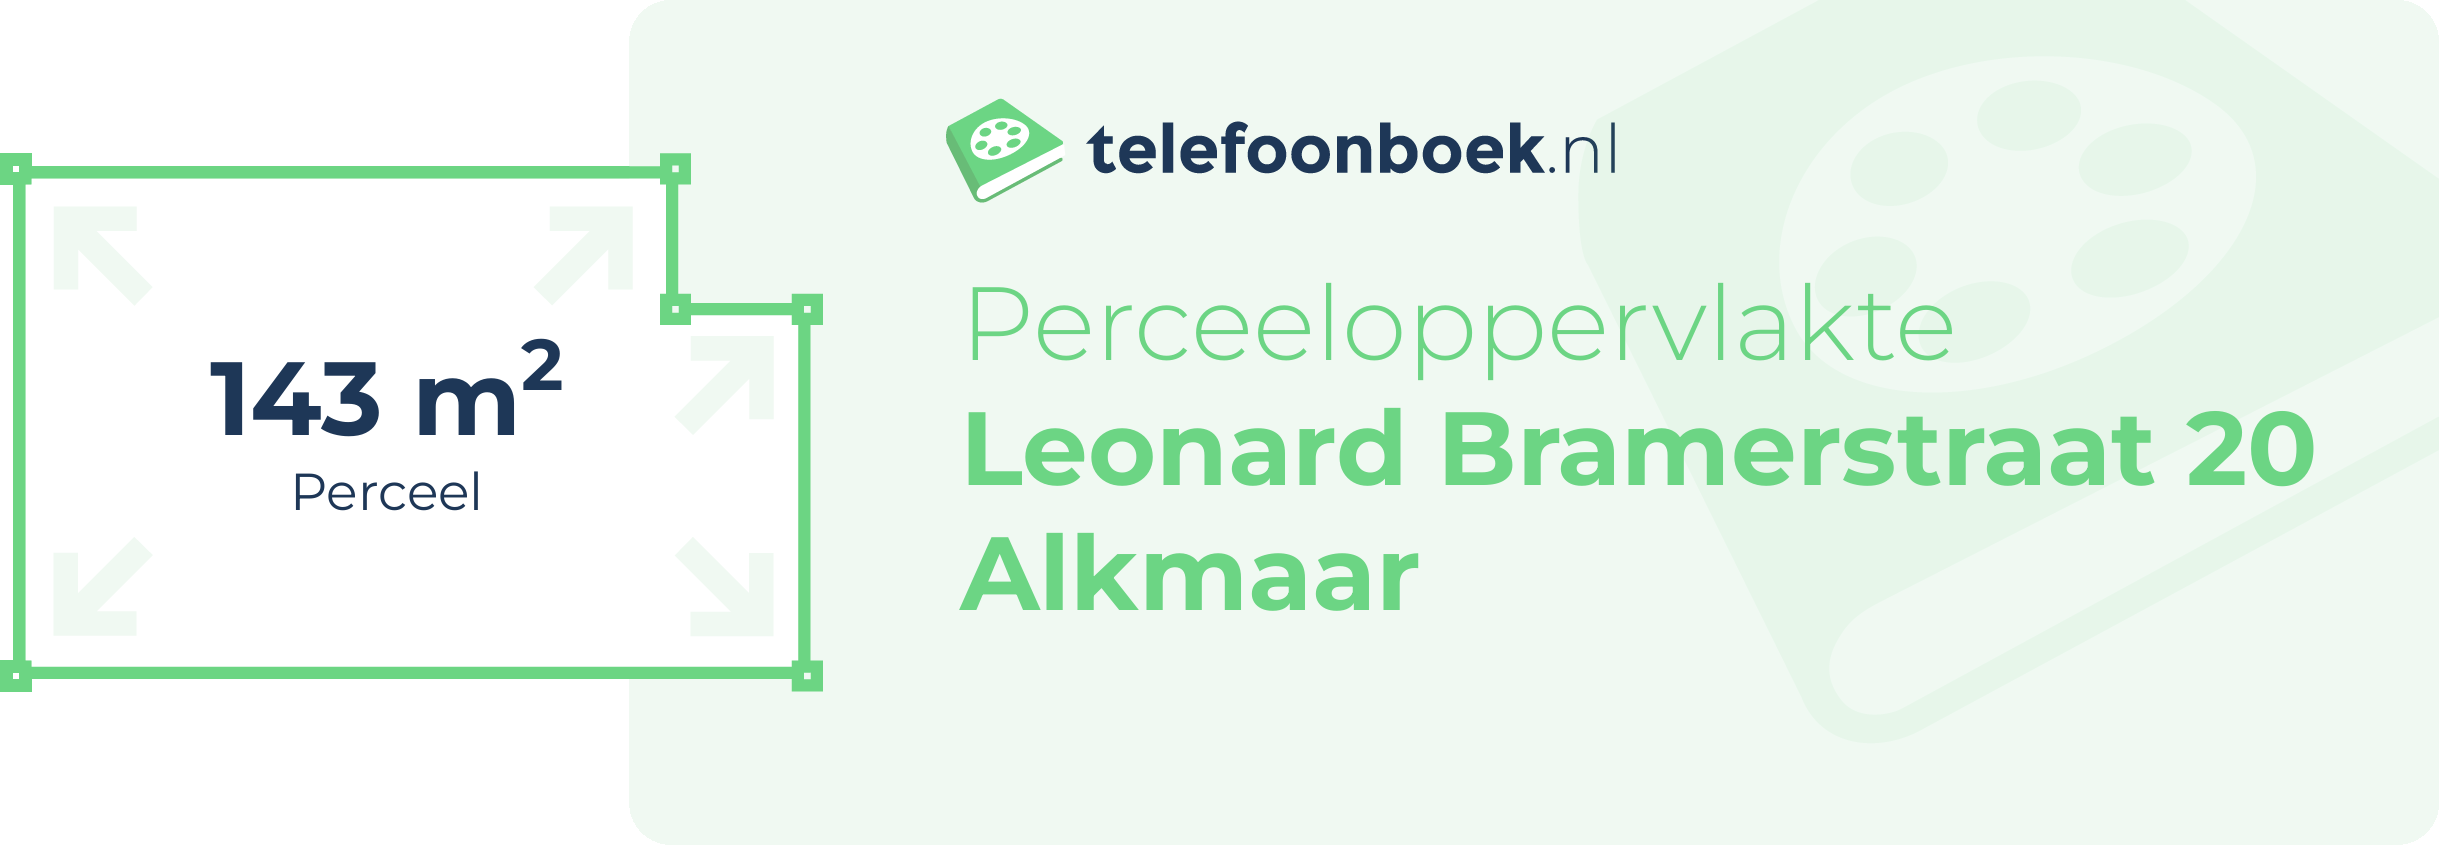 Perceeloppervlakte Leonard Bramerstraat 20 Alkmaar